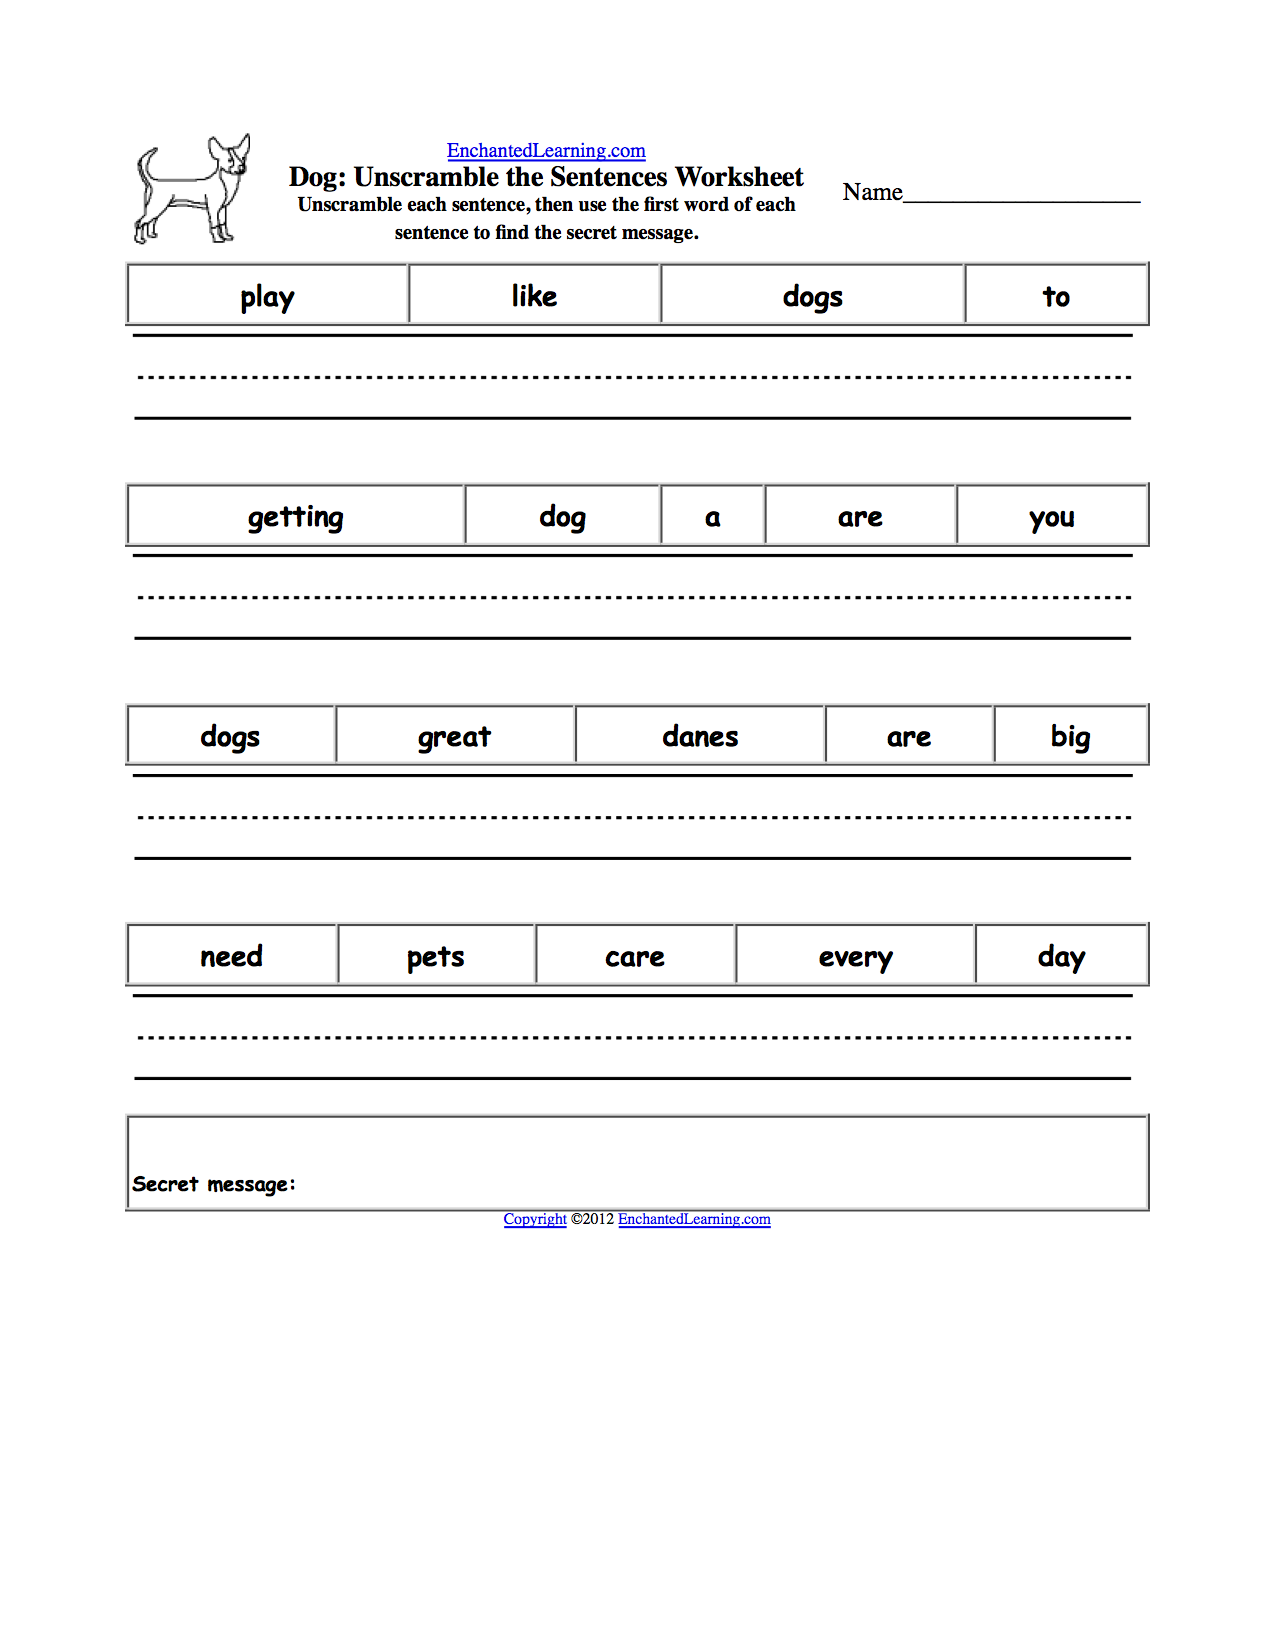 15-best-images-of-making-simple-sentences-worksheets-reading-simple-sentence-kindergarten